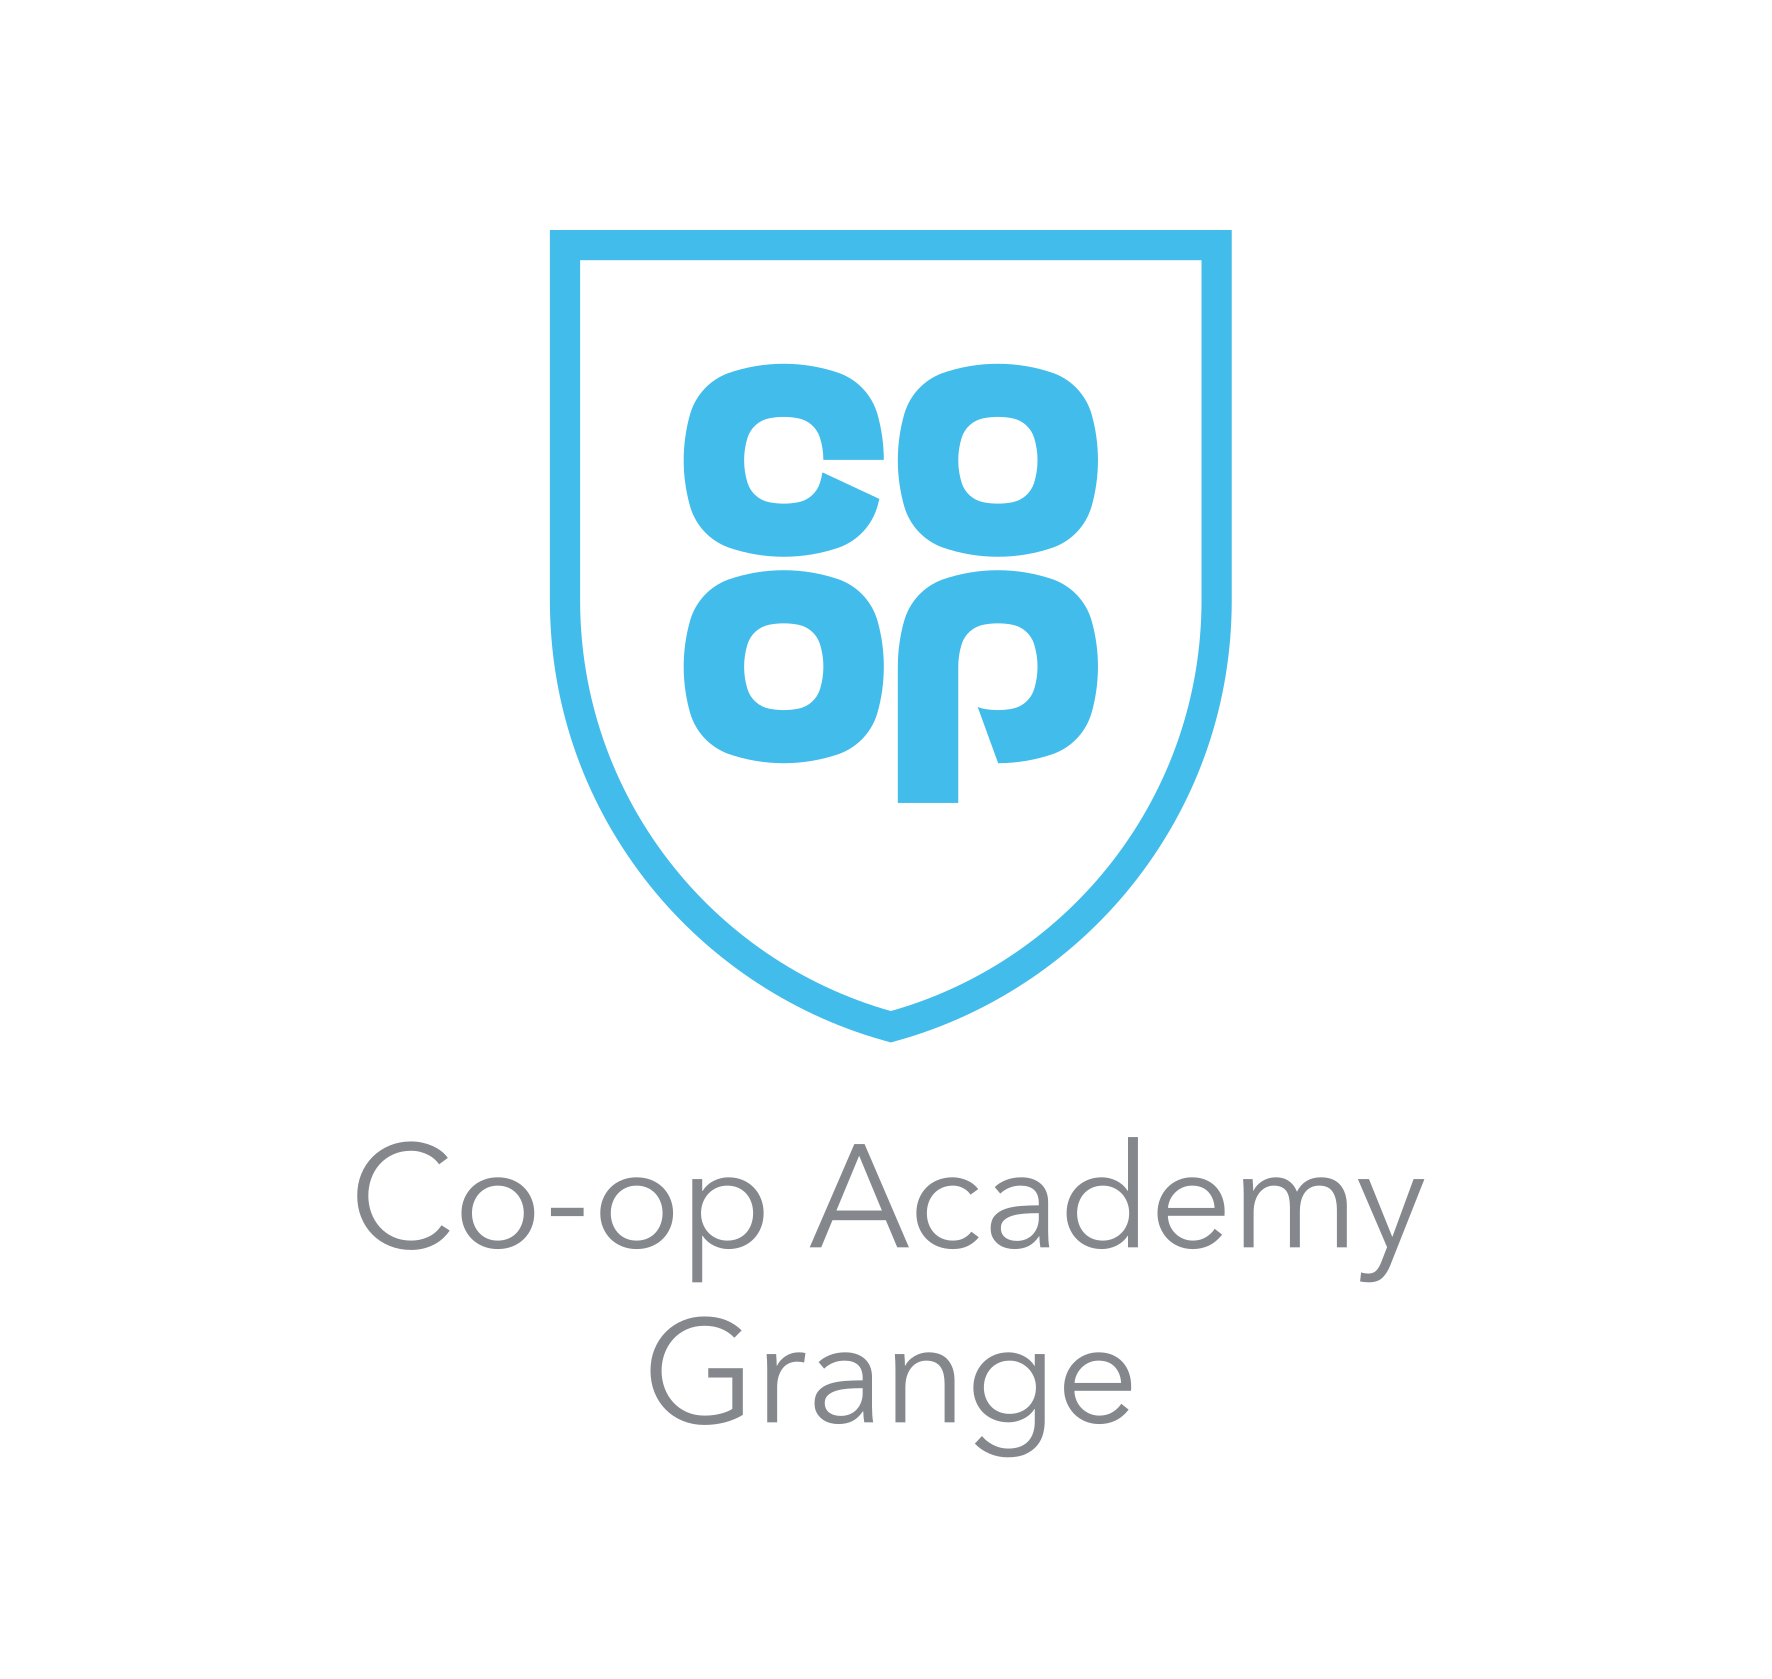 Co-op Academy Grange logo